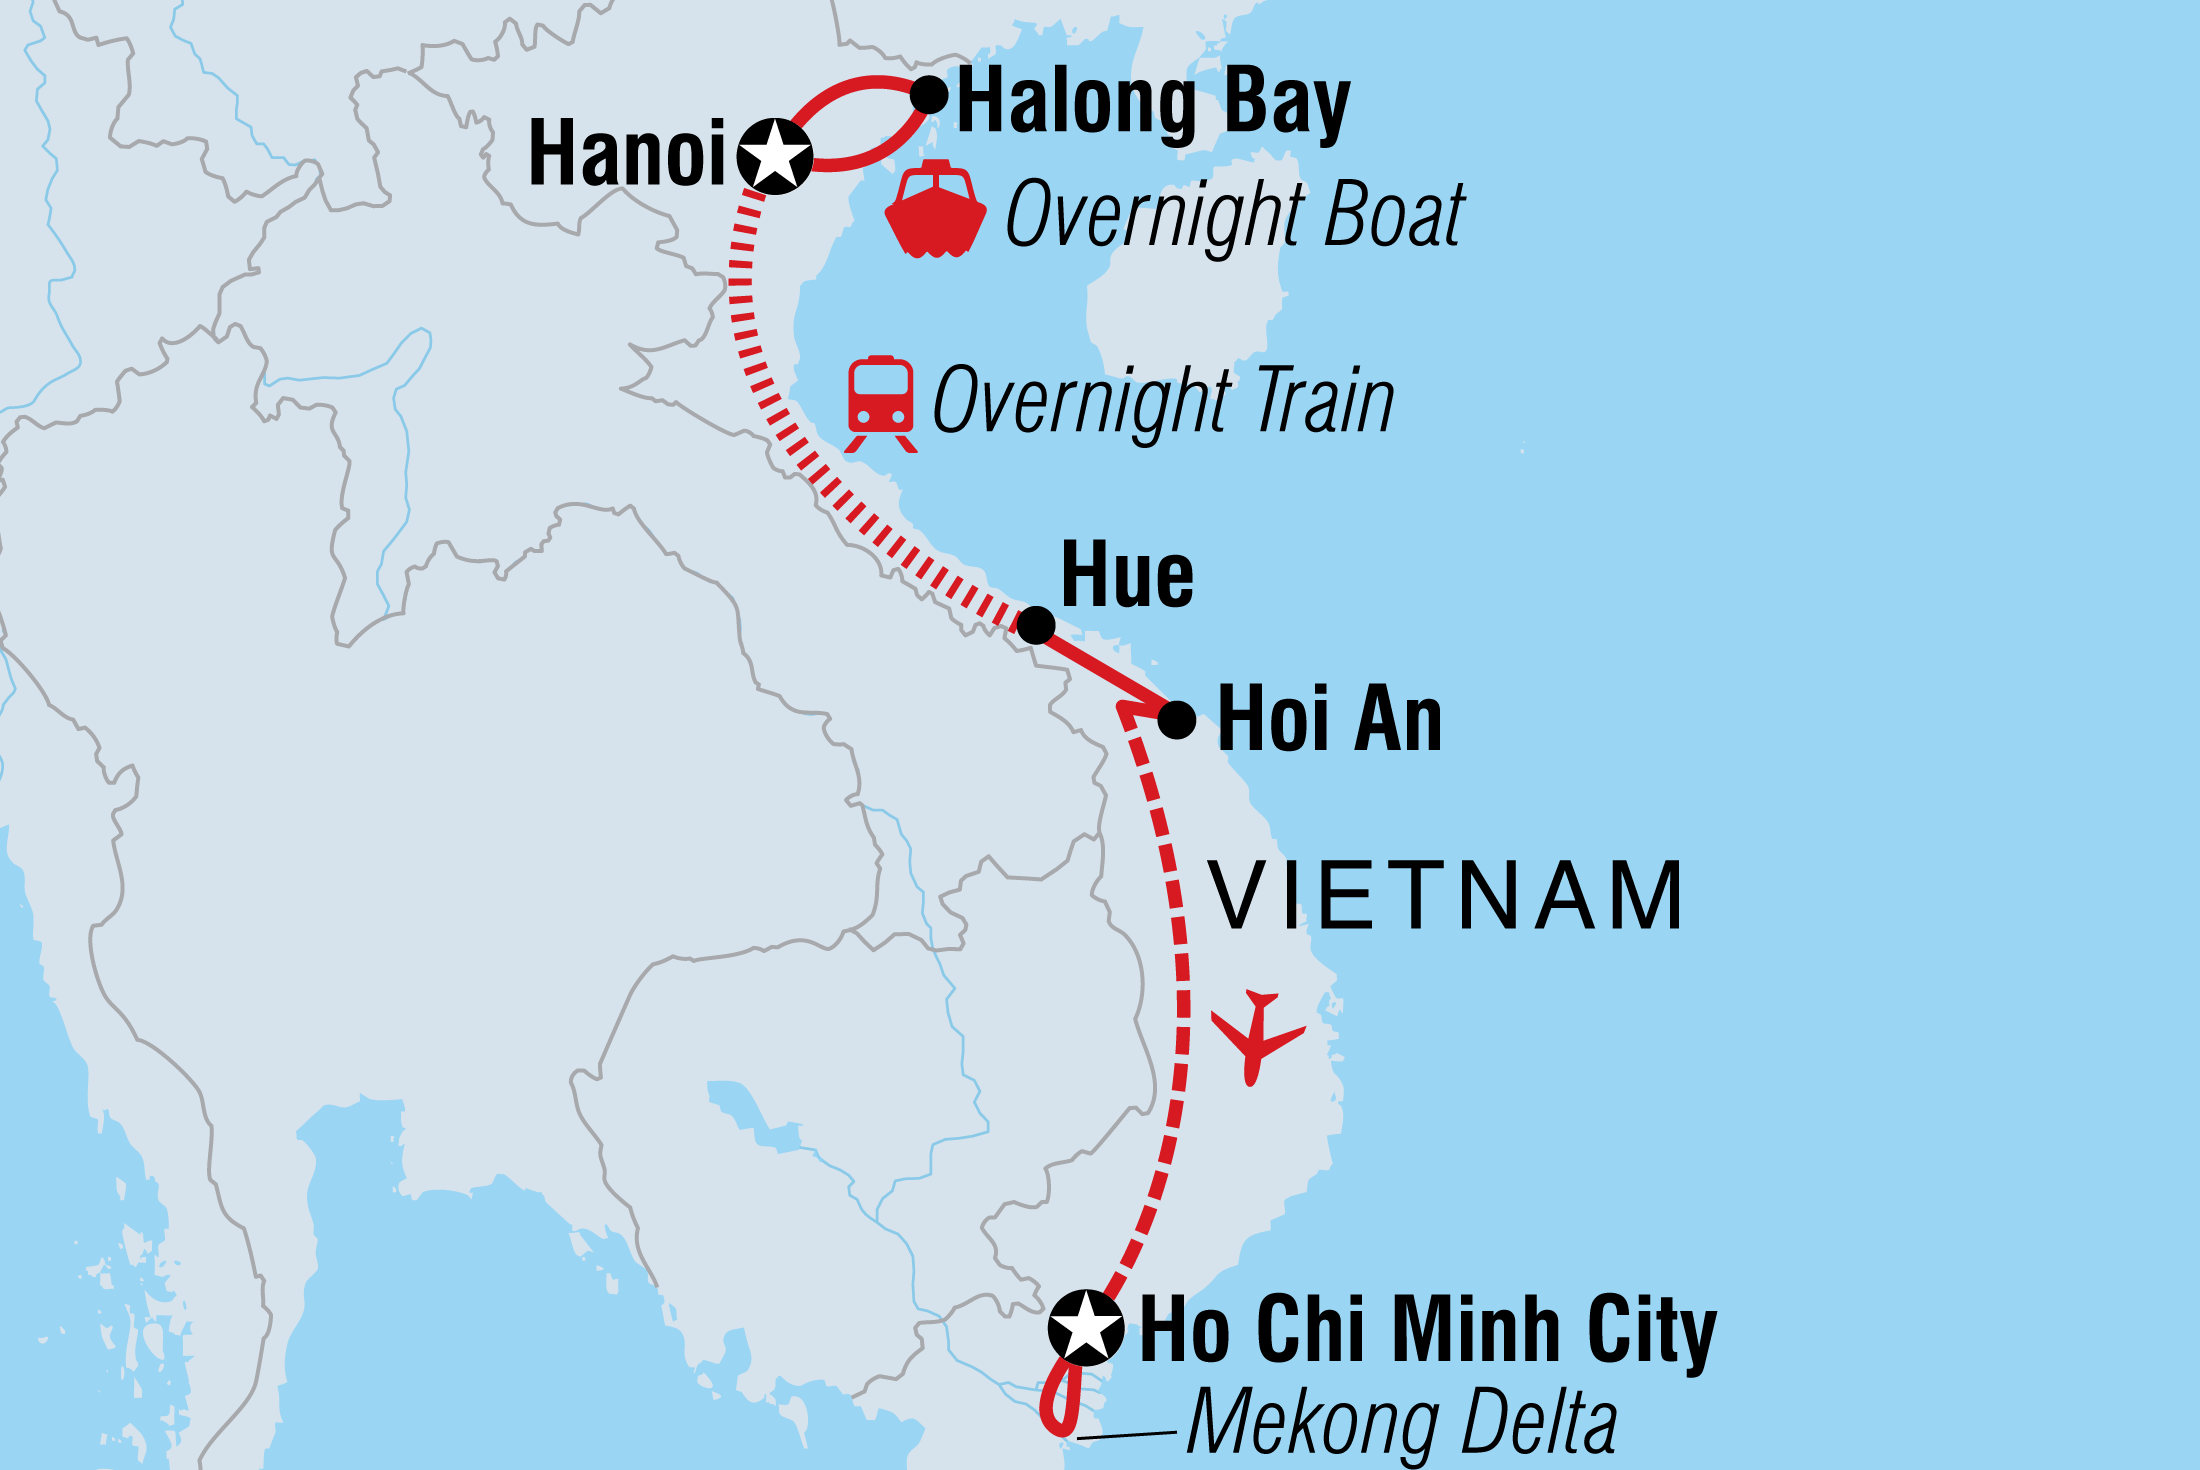 vietnam trip itinerary 4 days